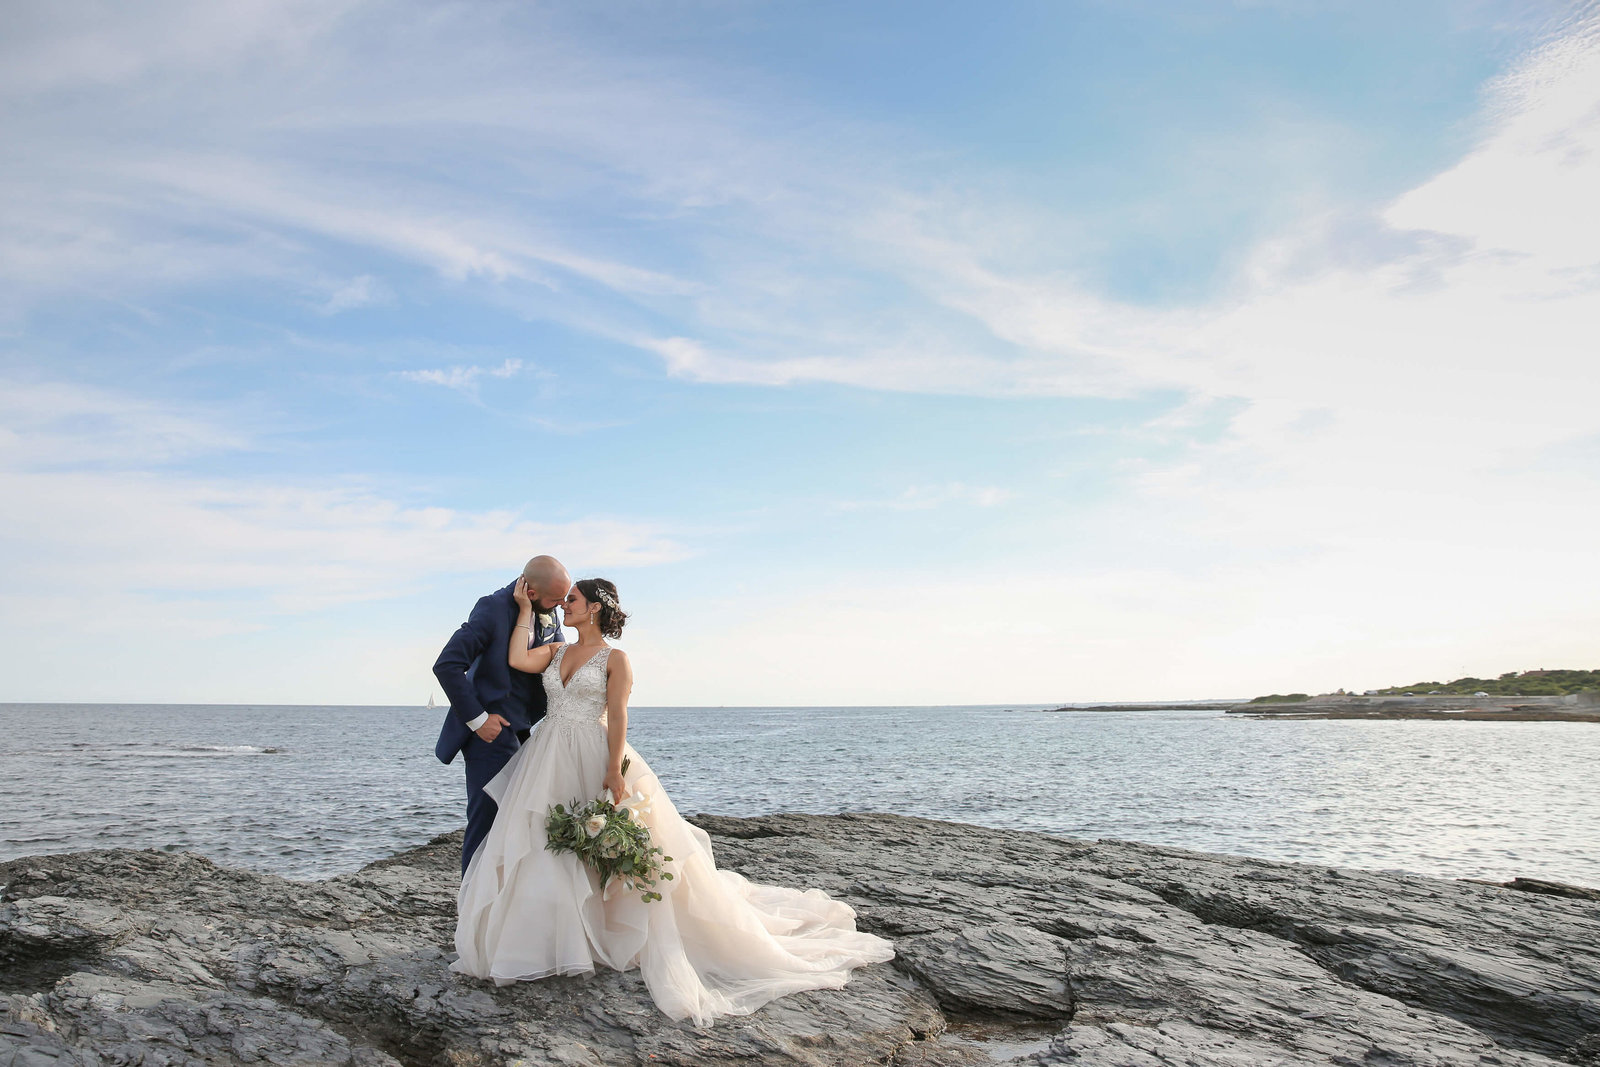 Wedding photography at Brenton Point Park in Newport Rhode Island.